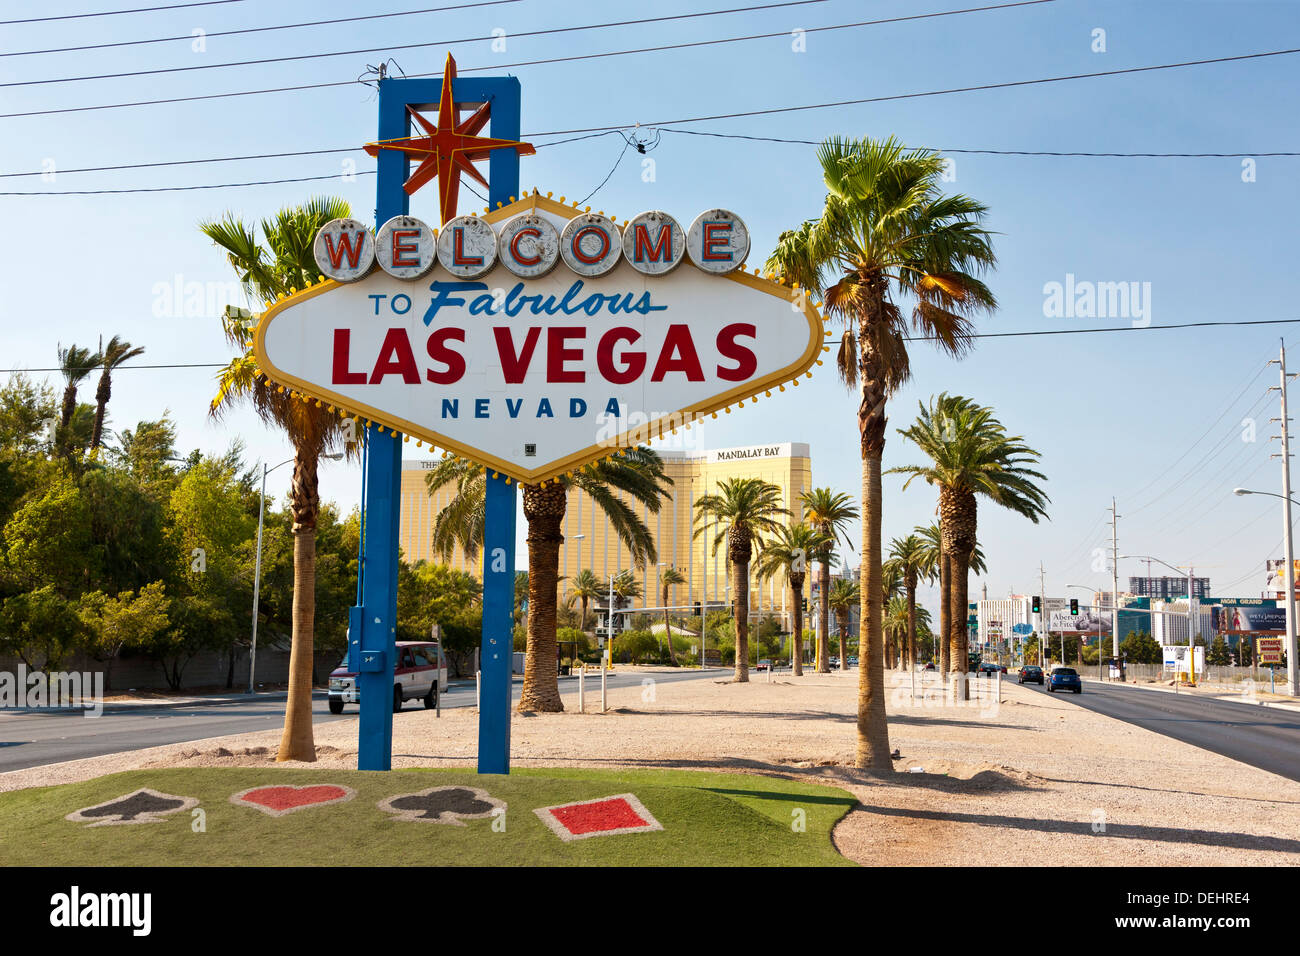 'Welcome to Fabulous Las Vegas' sign on Las Vegas Boulevard South. JMH5453 Stock Photo